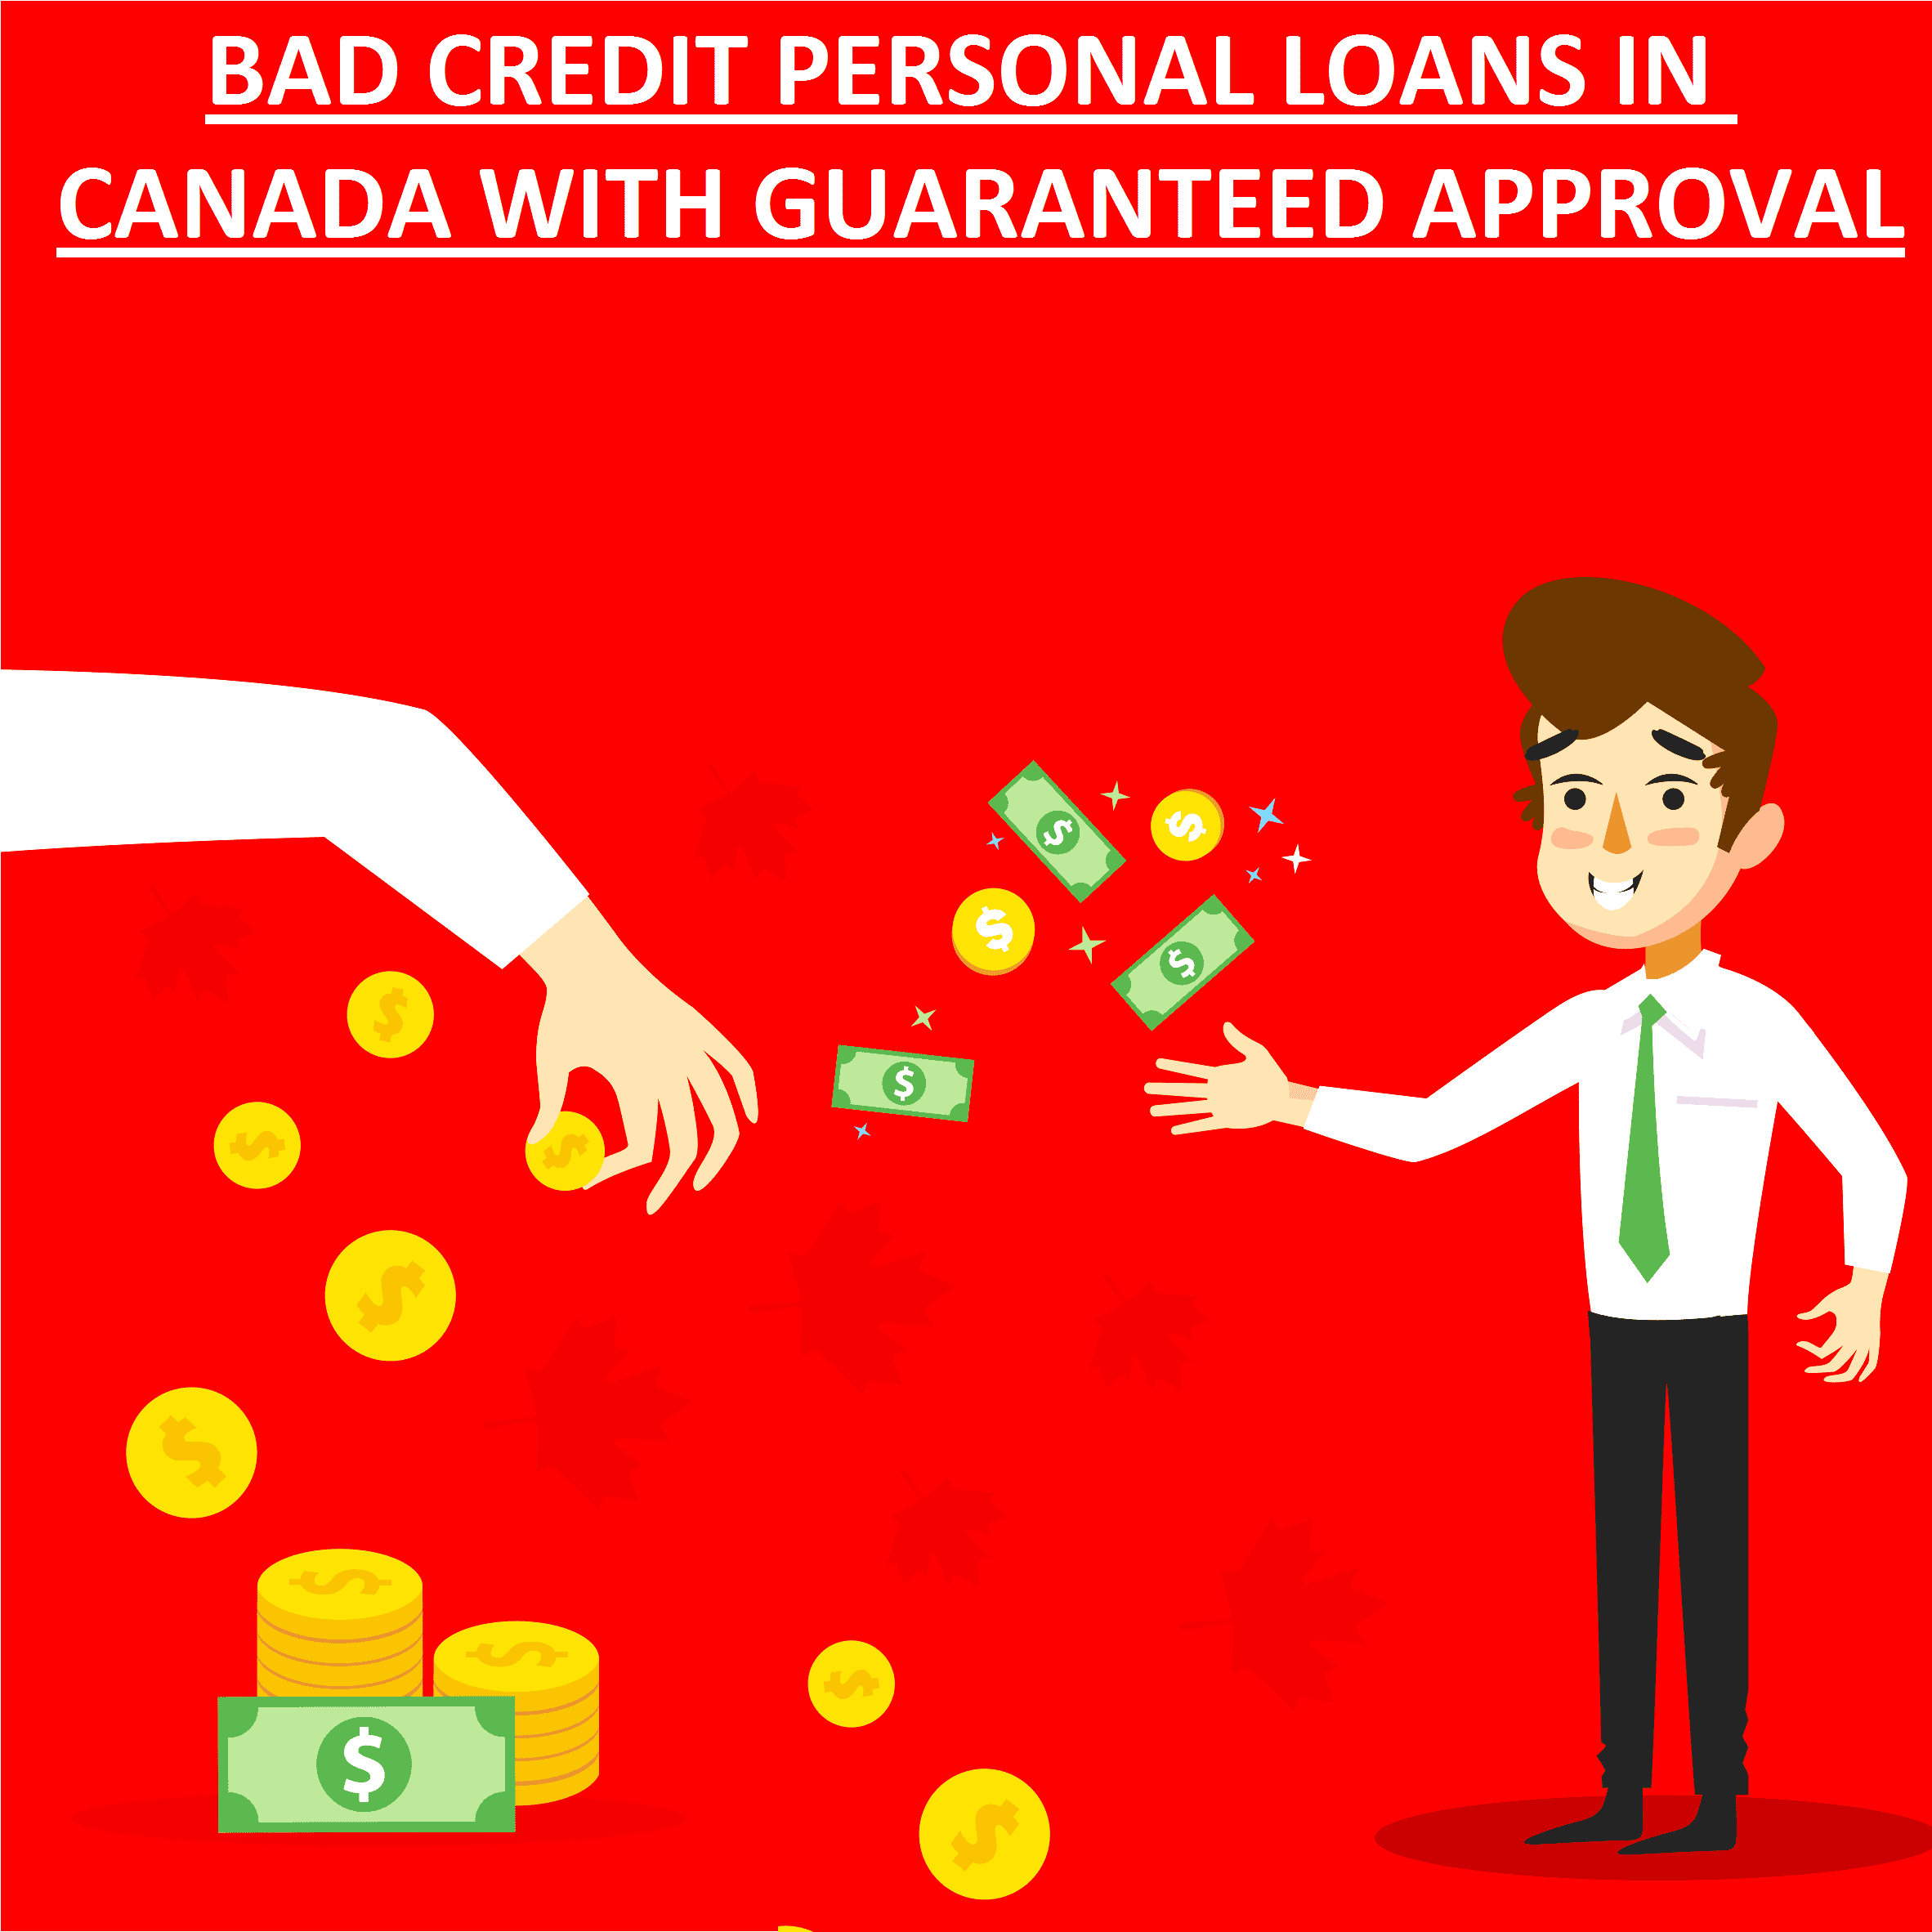 #1 Online Canadian Lender. 87% of Bad Credit Personal Loans Guaranteed ...